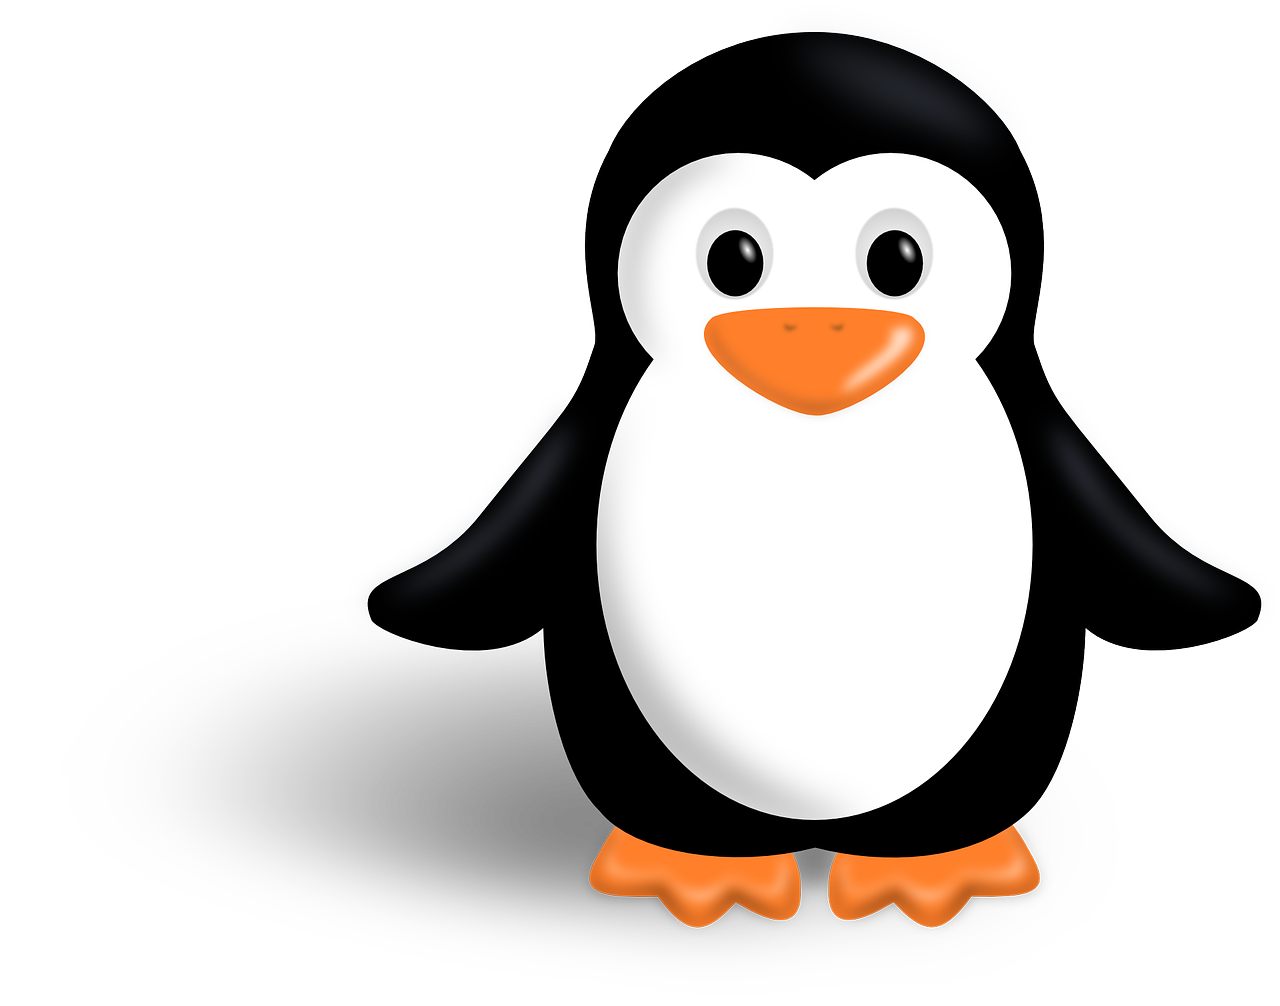 a black and white penguin with orange feet, an illustration of, pixabay, mingei, opengl, jewel, falvie, pus